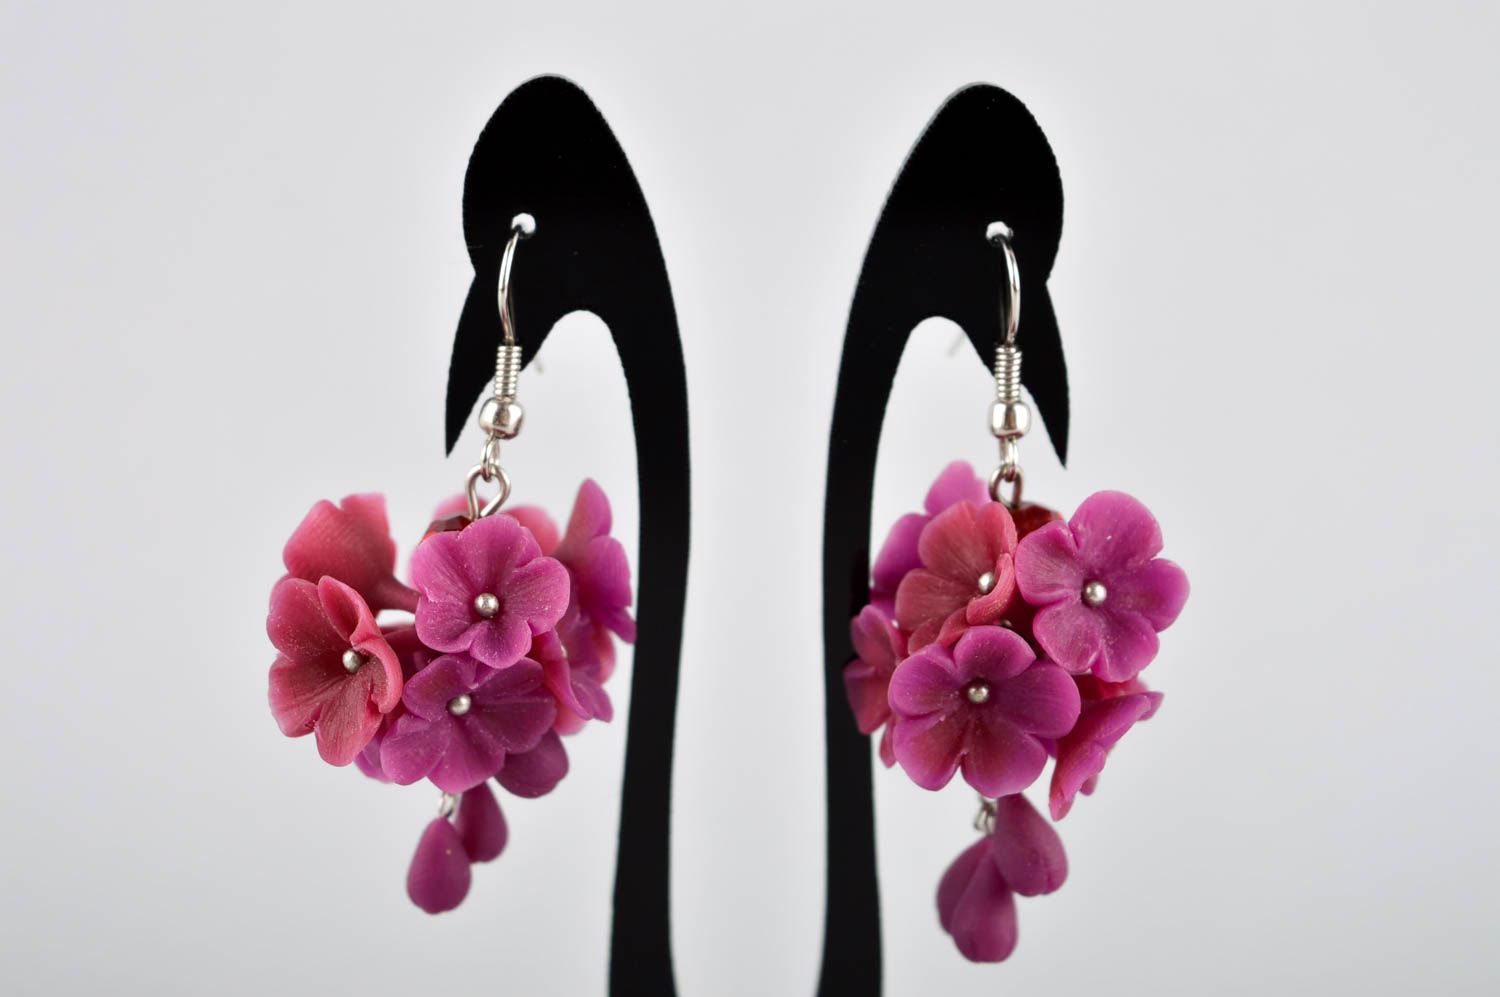 Flower earrings handmade plastic earrings polymer clay accessories for women photo 2